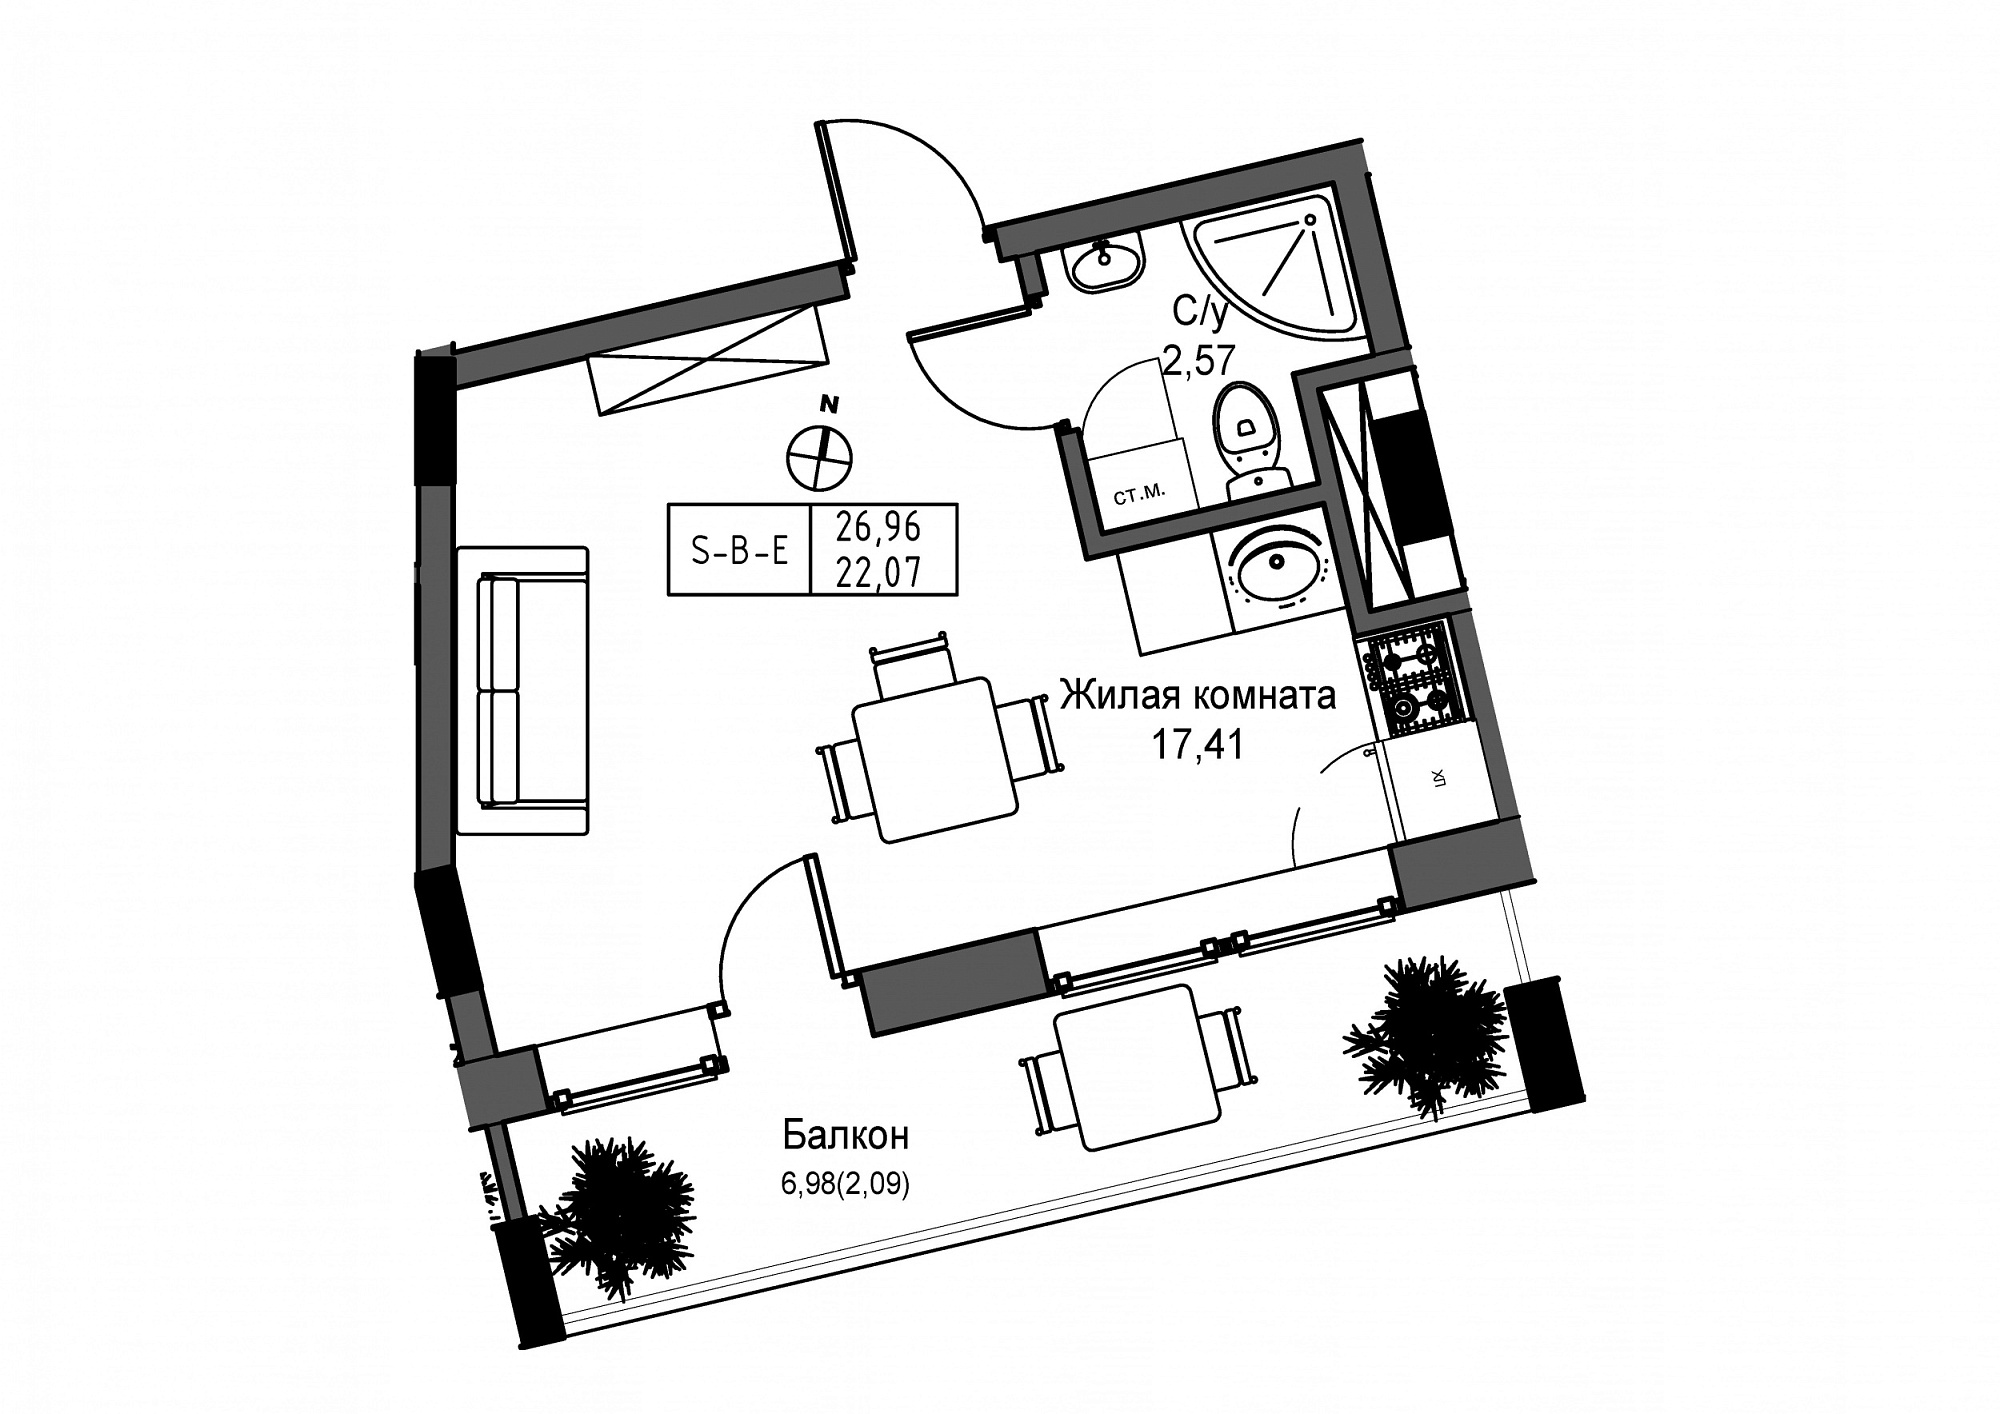 Планування Smart-квартира площею 22.07м2, UM-004-08/0014.